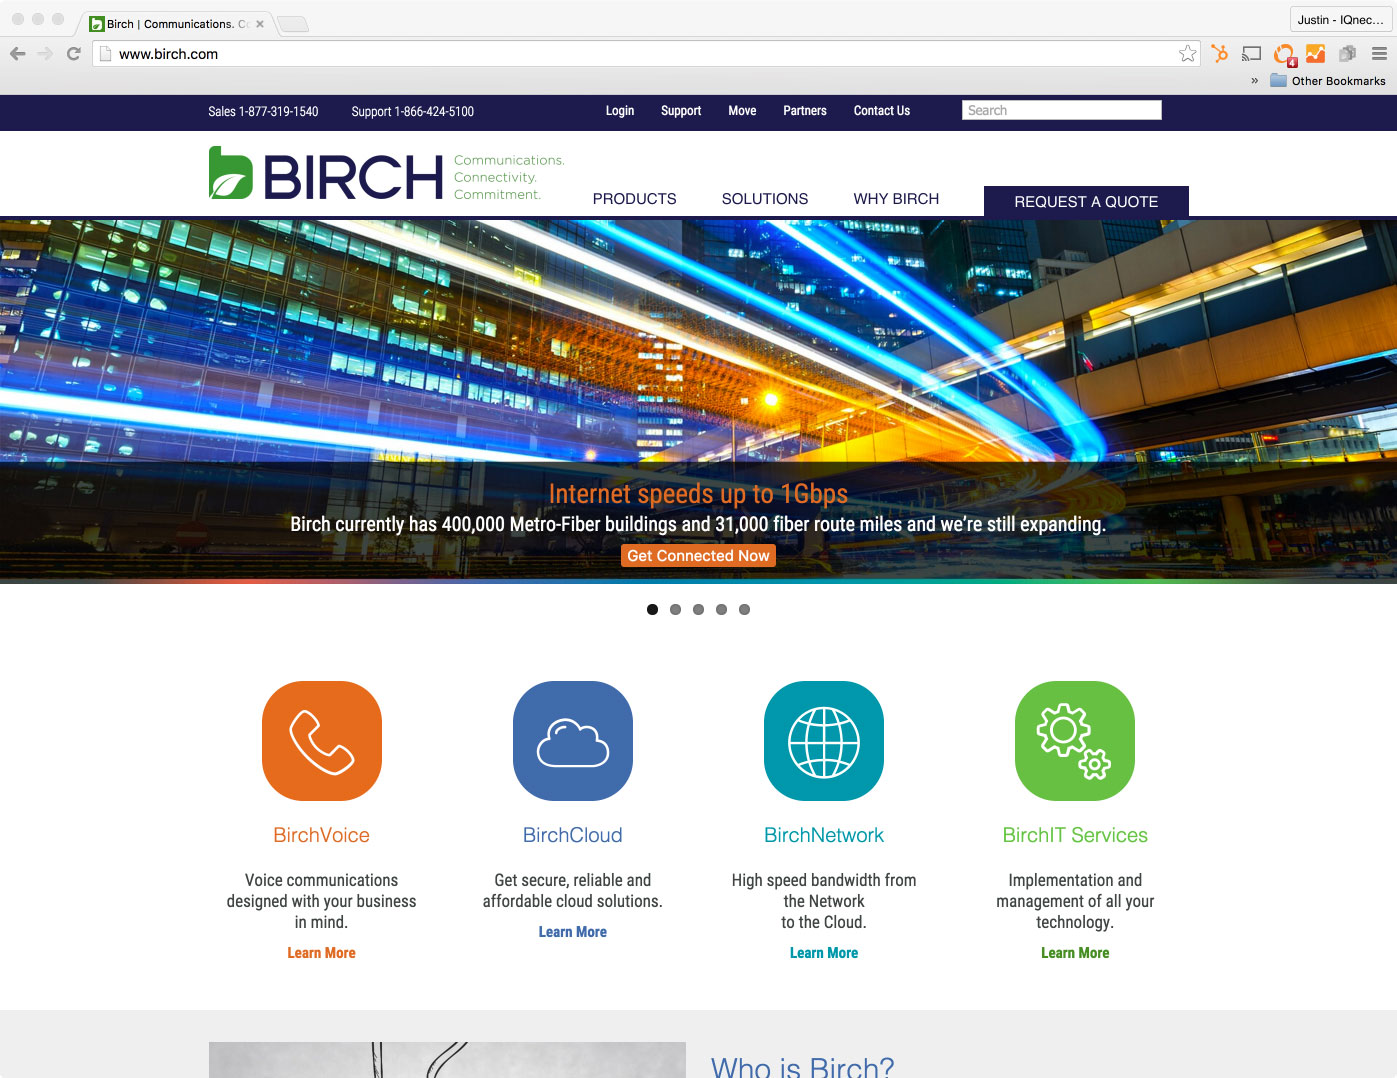 Inbound Marketing for B2B - Birch Communications Case Study